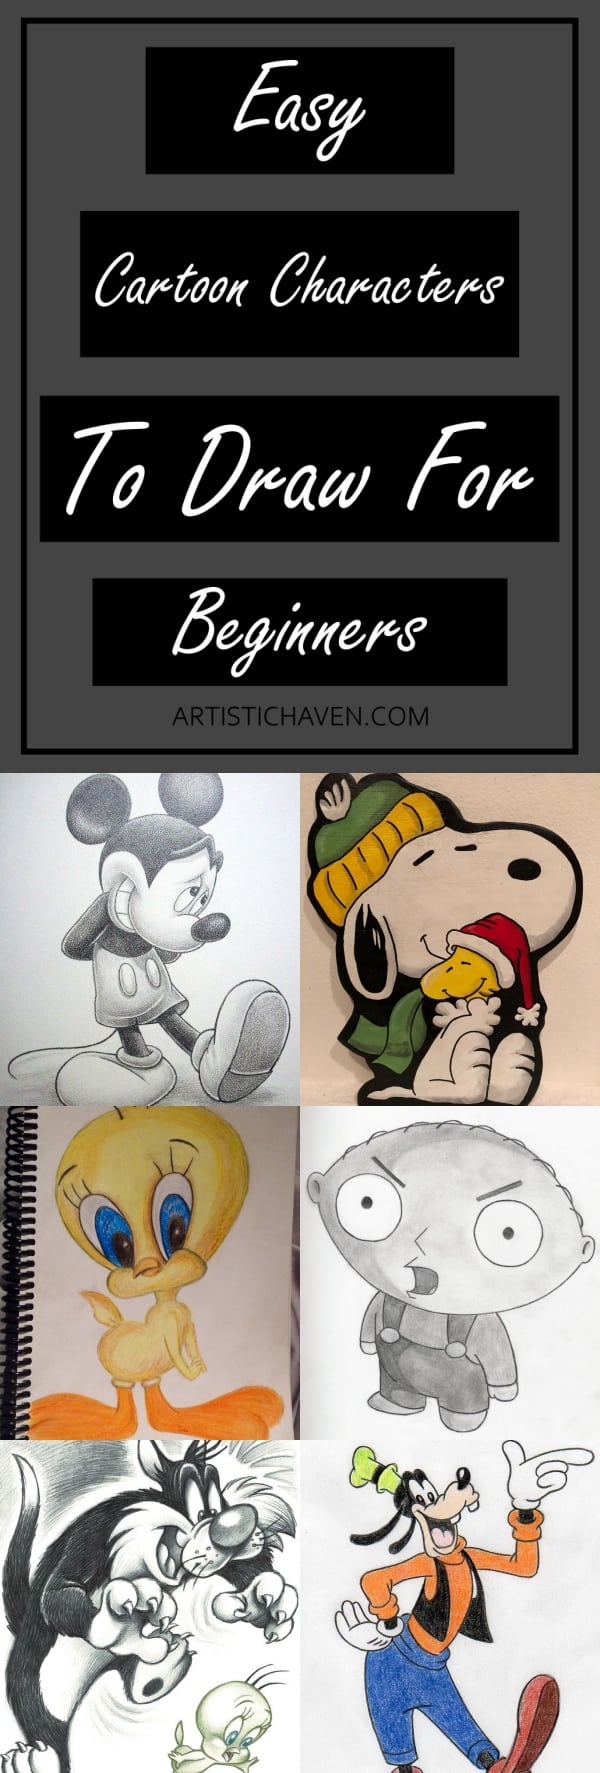 How To Draw Disney Characters | Disney Video-saigonsouth.com.vn